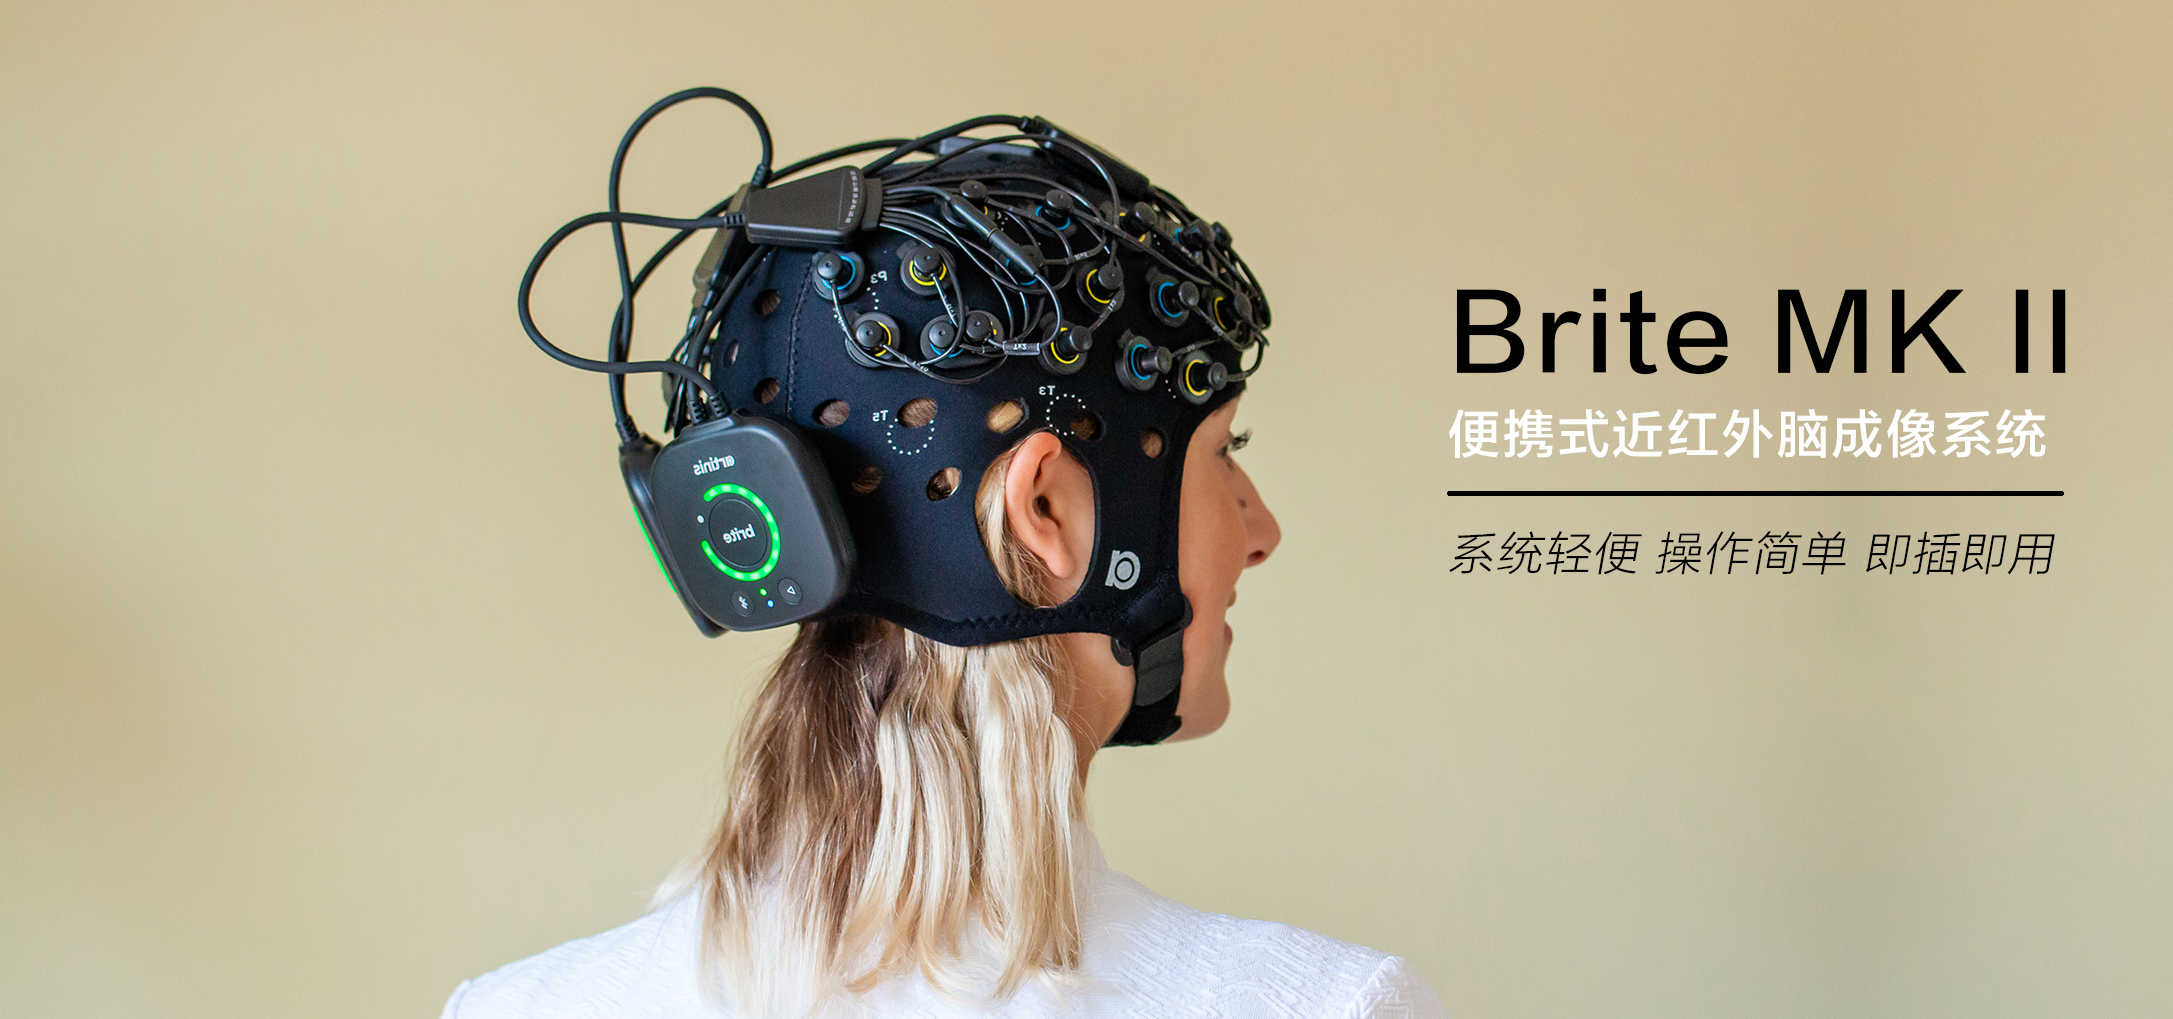 <strong>Brite MK II</strong>便携式近红外脑成像系统